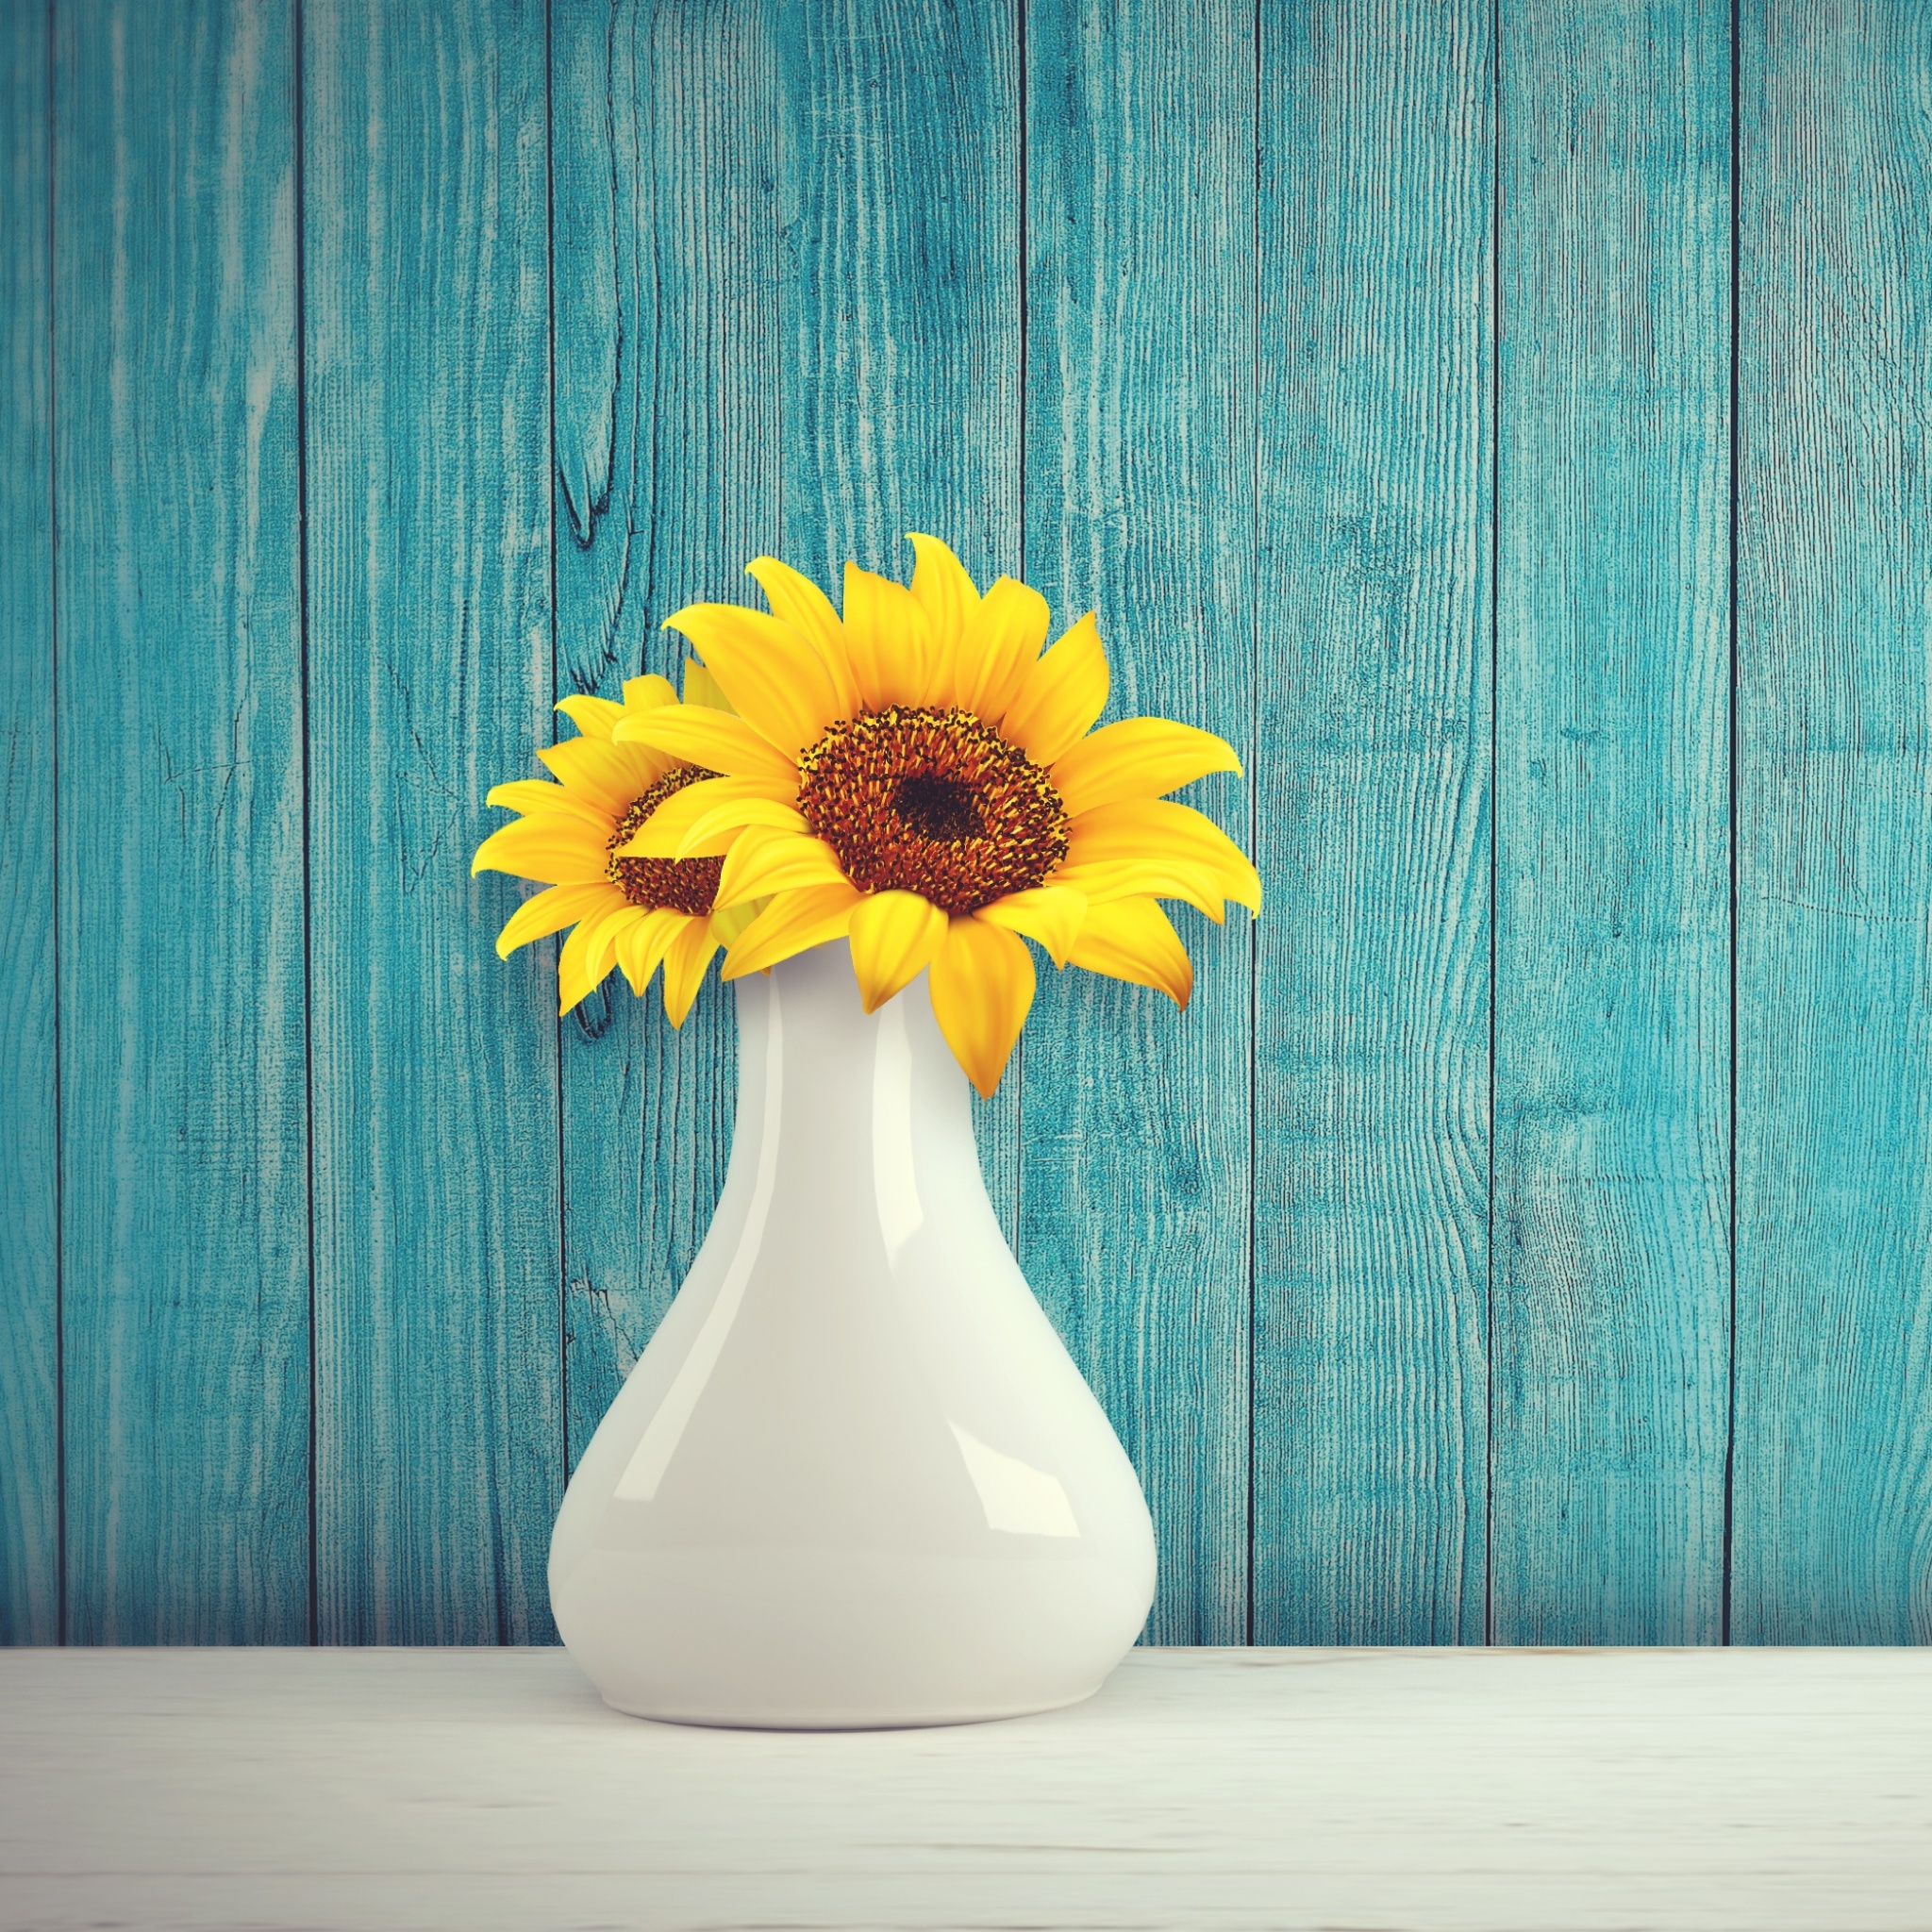 sunflowers flower vase wooden background teal 1536x2048 921